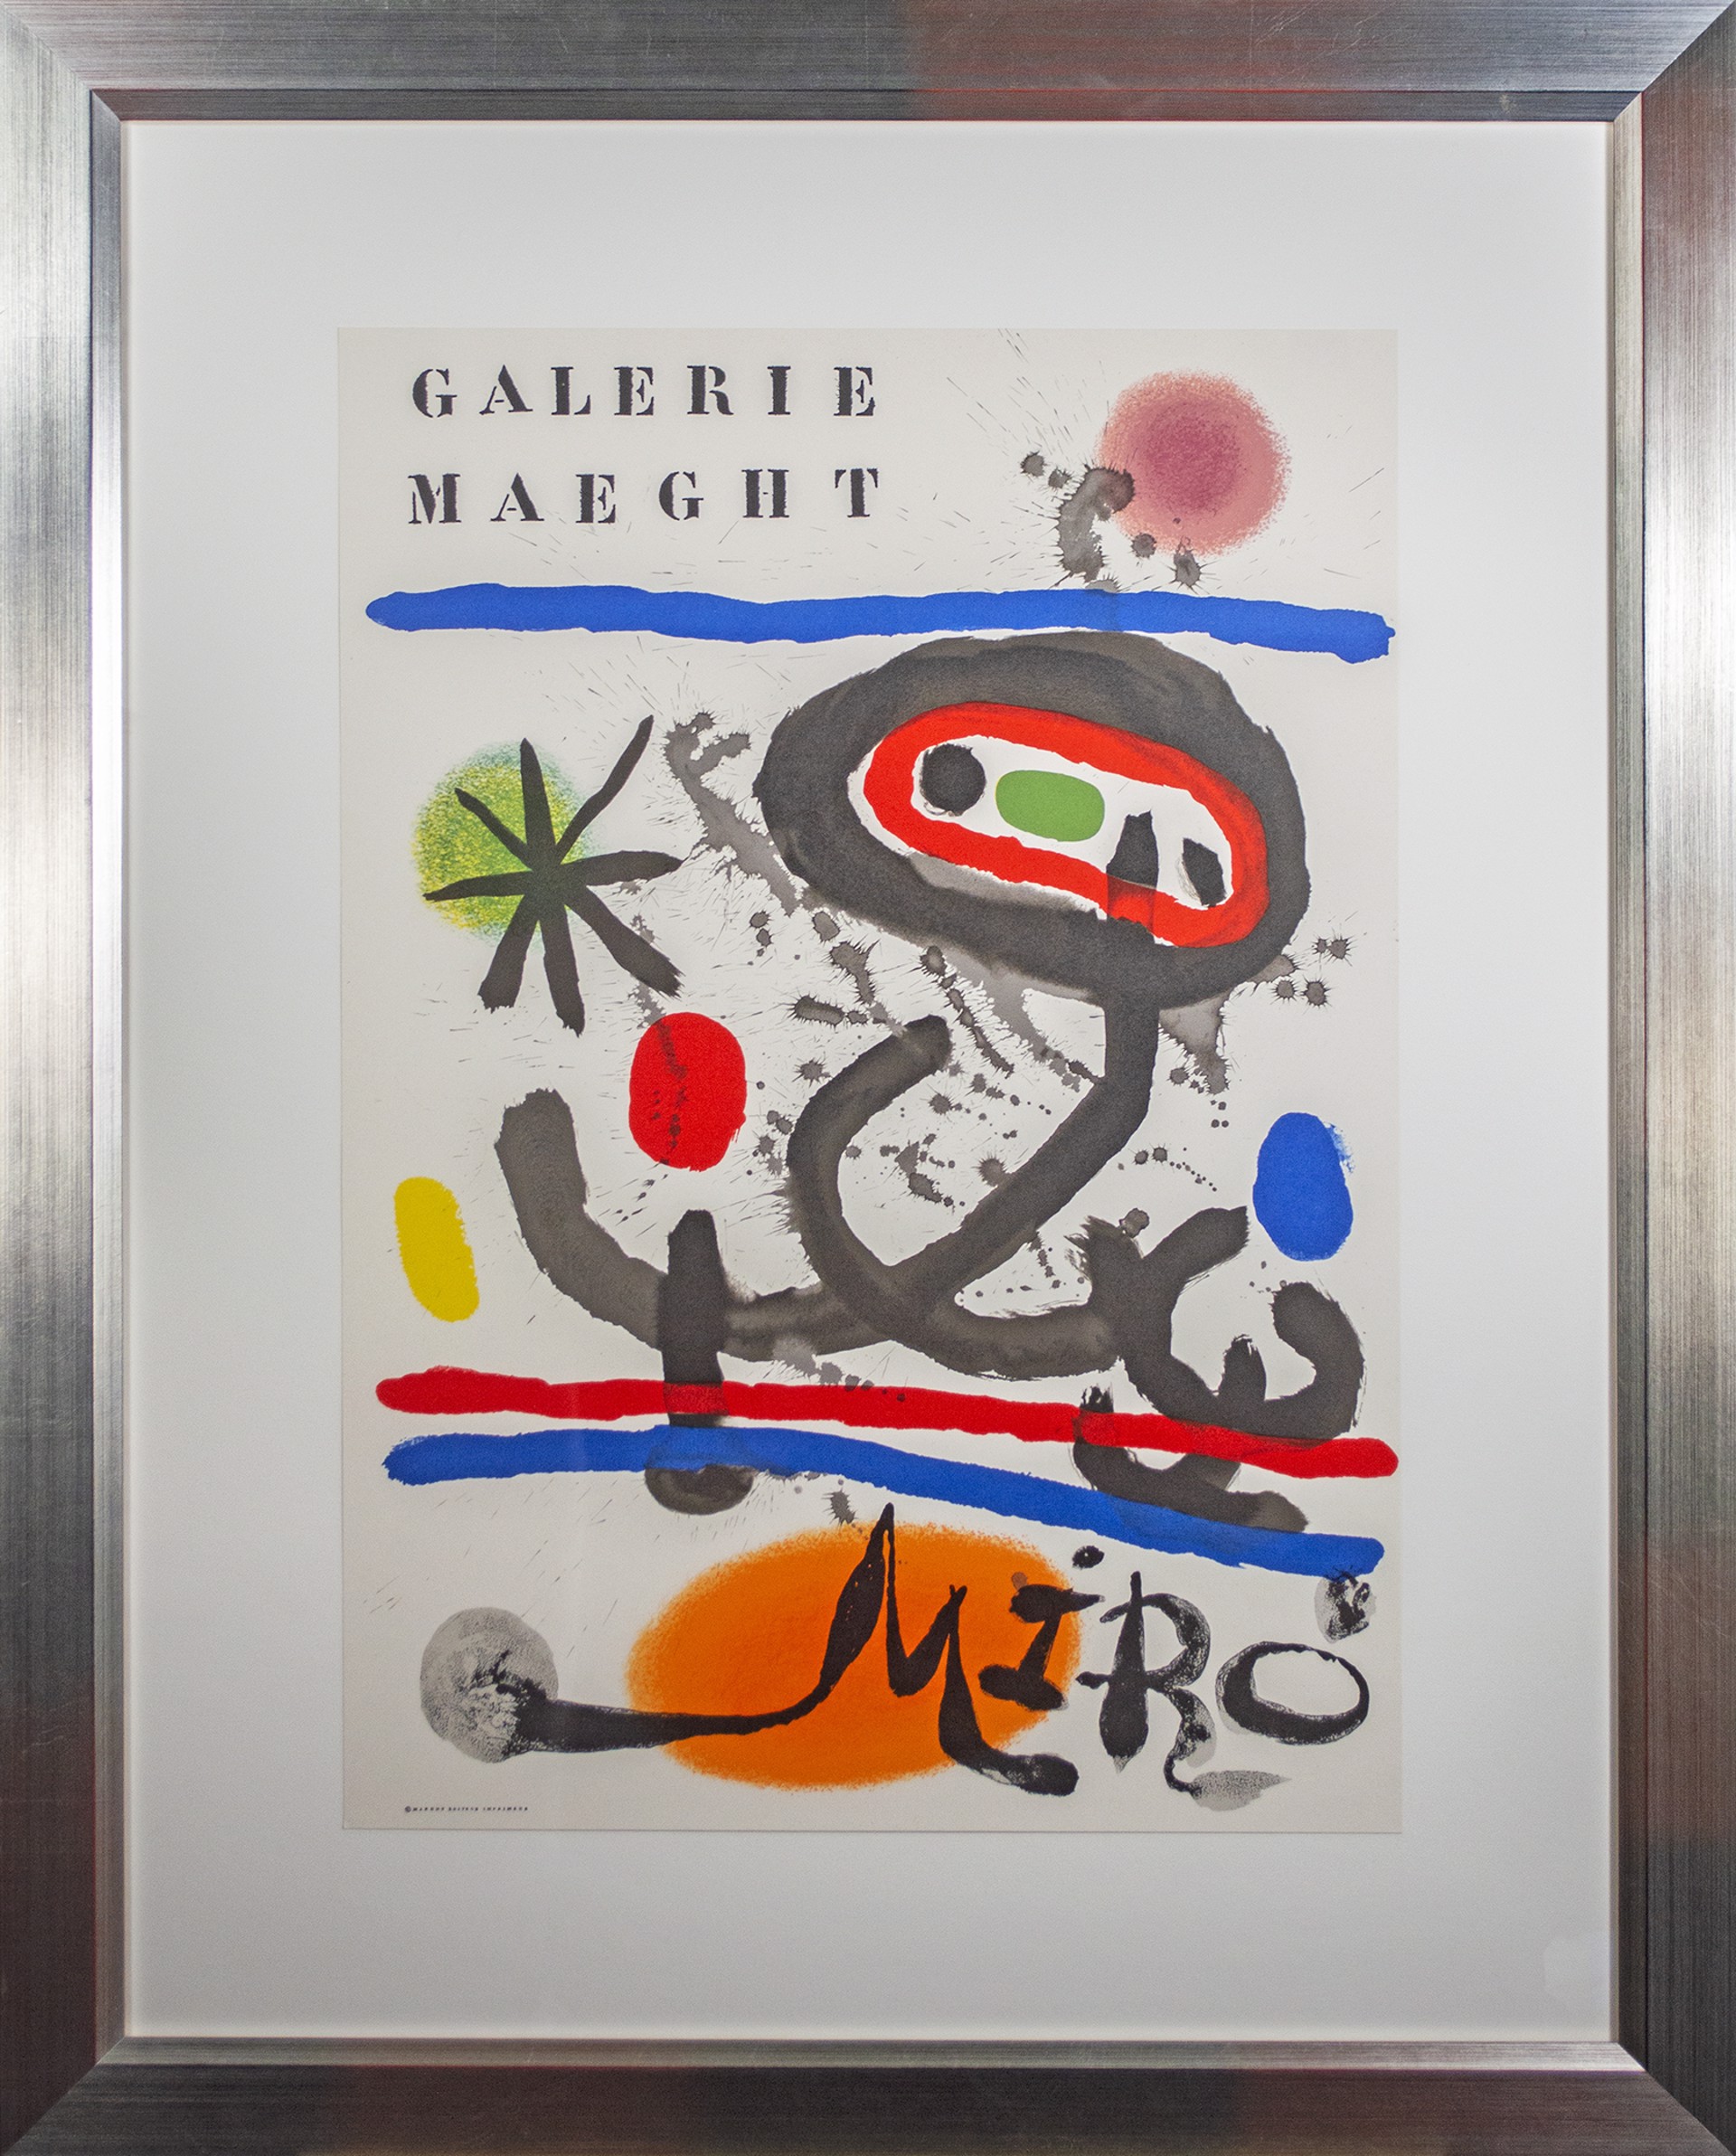 Galerie Maeght Miro © Maeght Editeur Imprimeur by Joan Miró